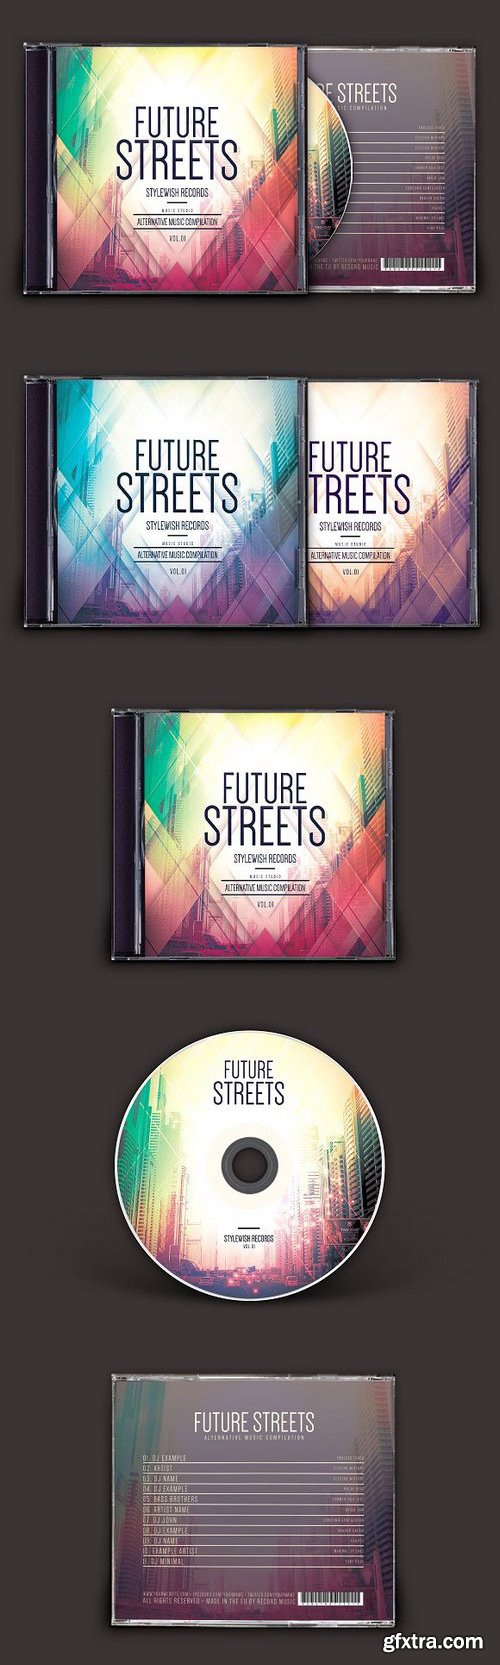 CM - Future Streets CD Cover Artwork 951525